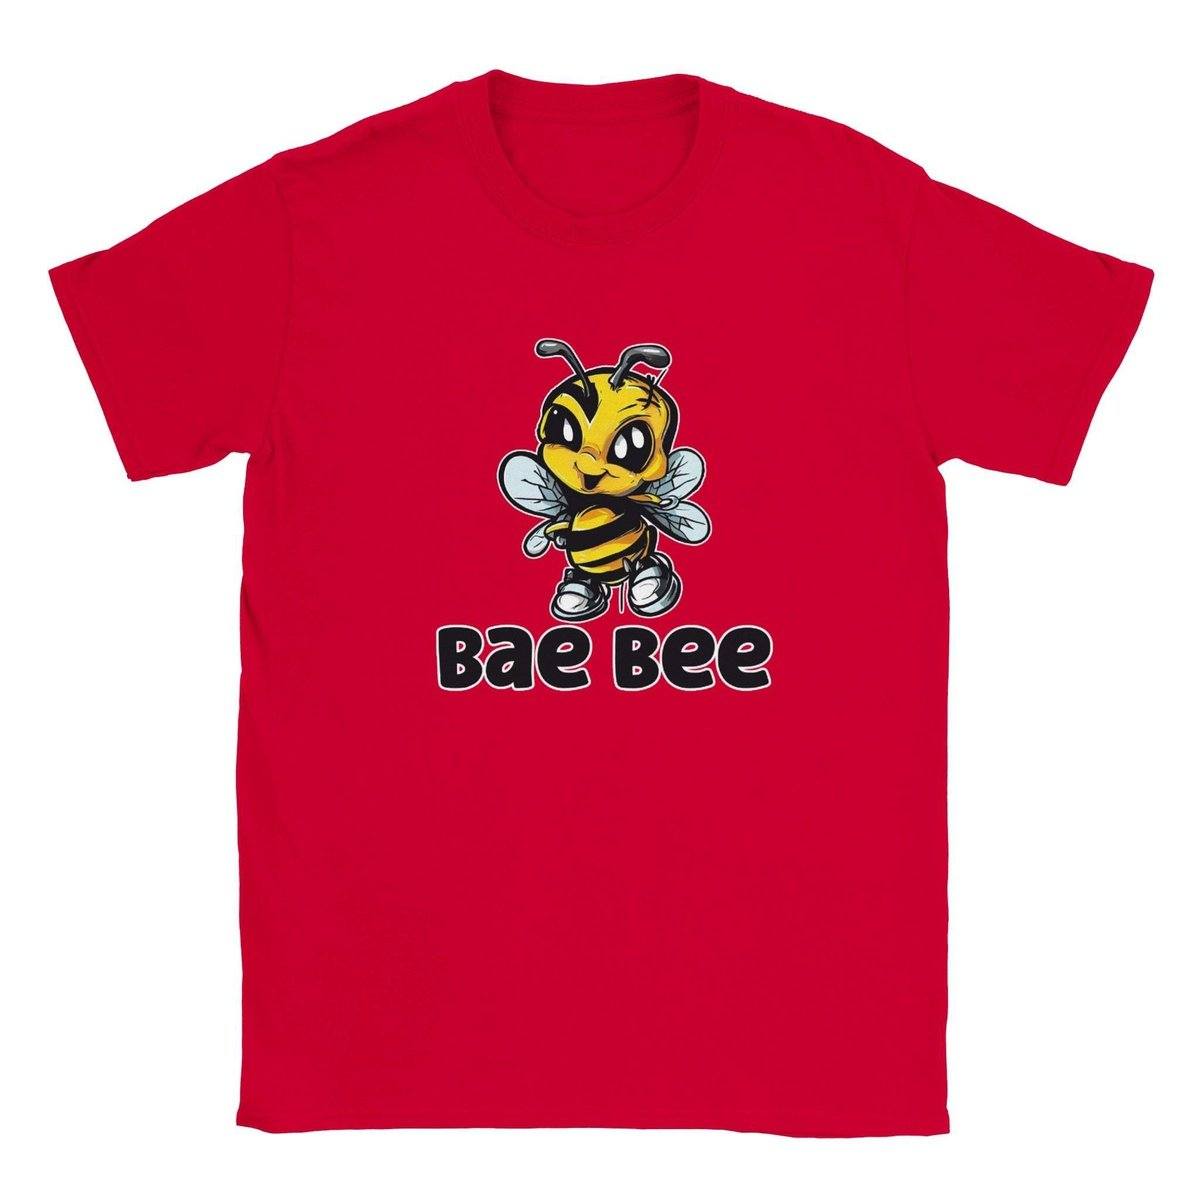 Bae Bee - Baby Bee Kids T-shirt Australia Online Color Red / XS